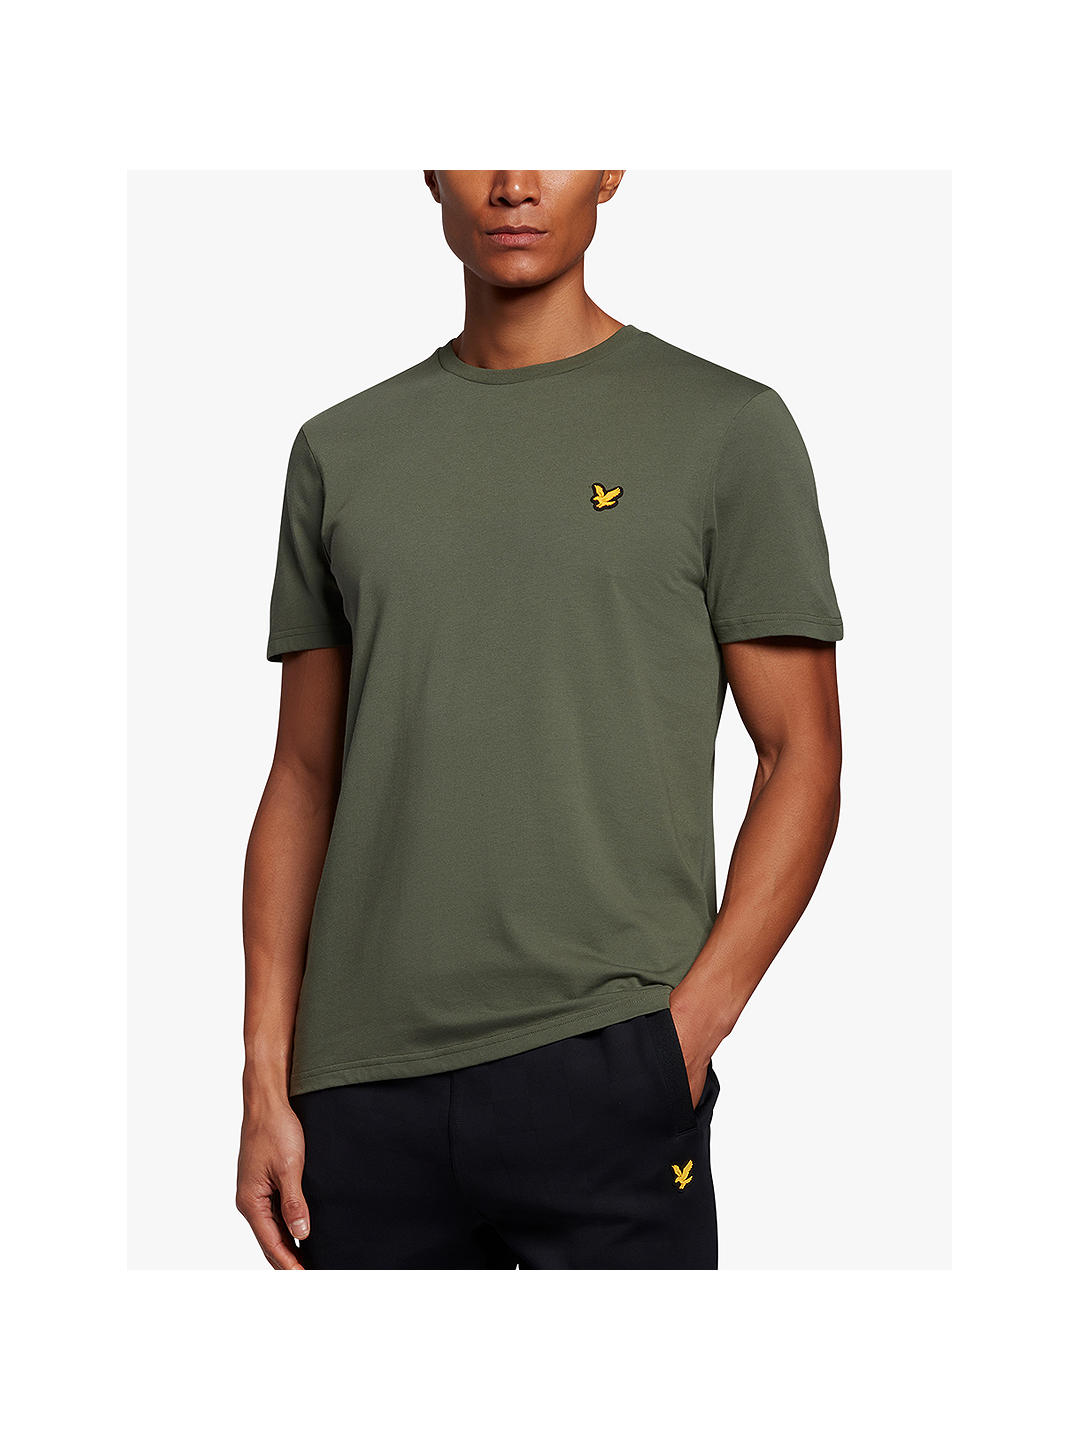 Lyle & Scott Martin T-Shirt, Cactus Green